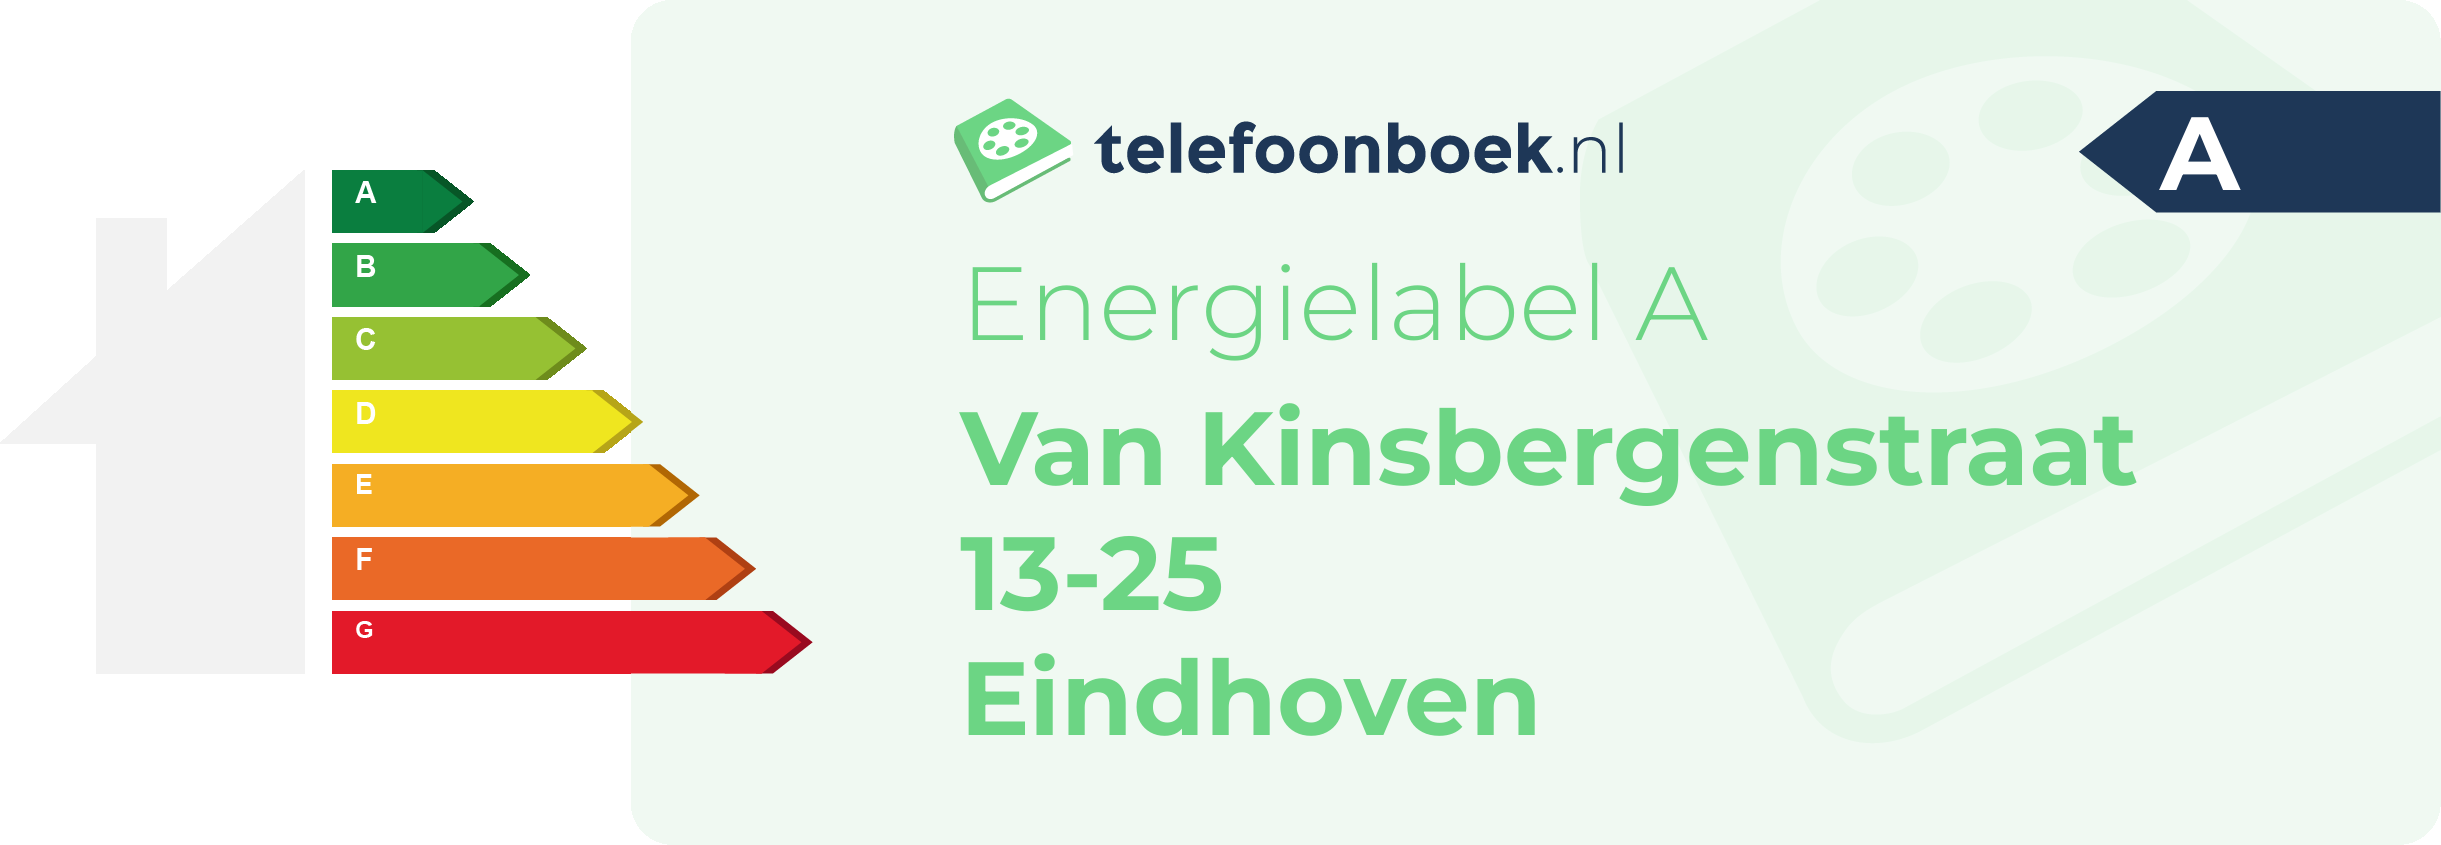 Energielabel Van Kinsbergenstraat 13-25 Eindhoven